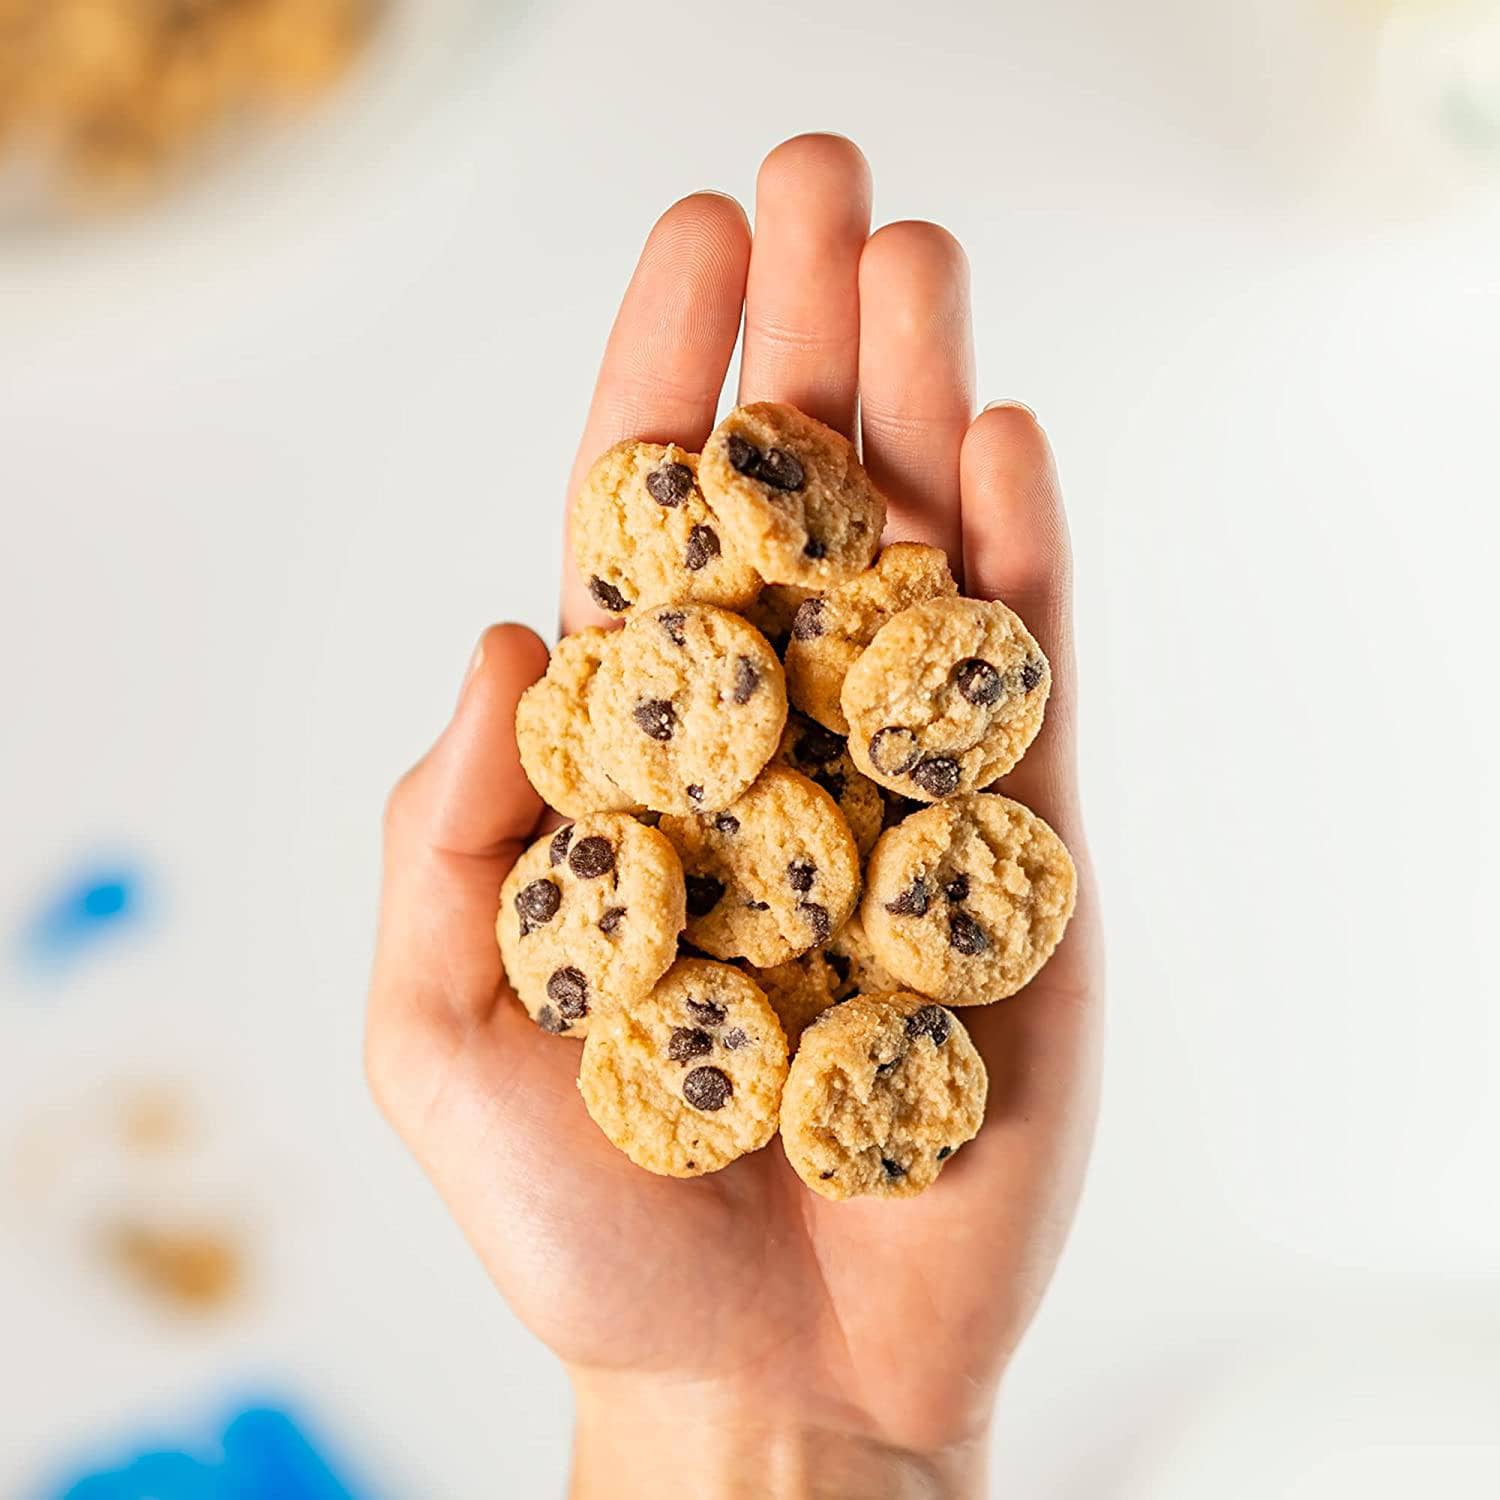 Mini Cookies: Chocolate Chip